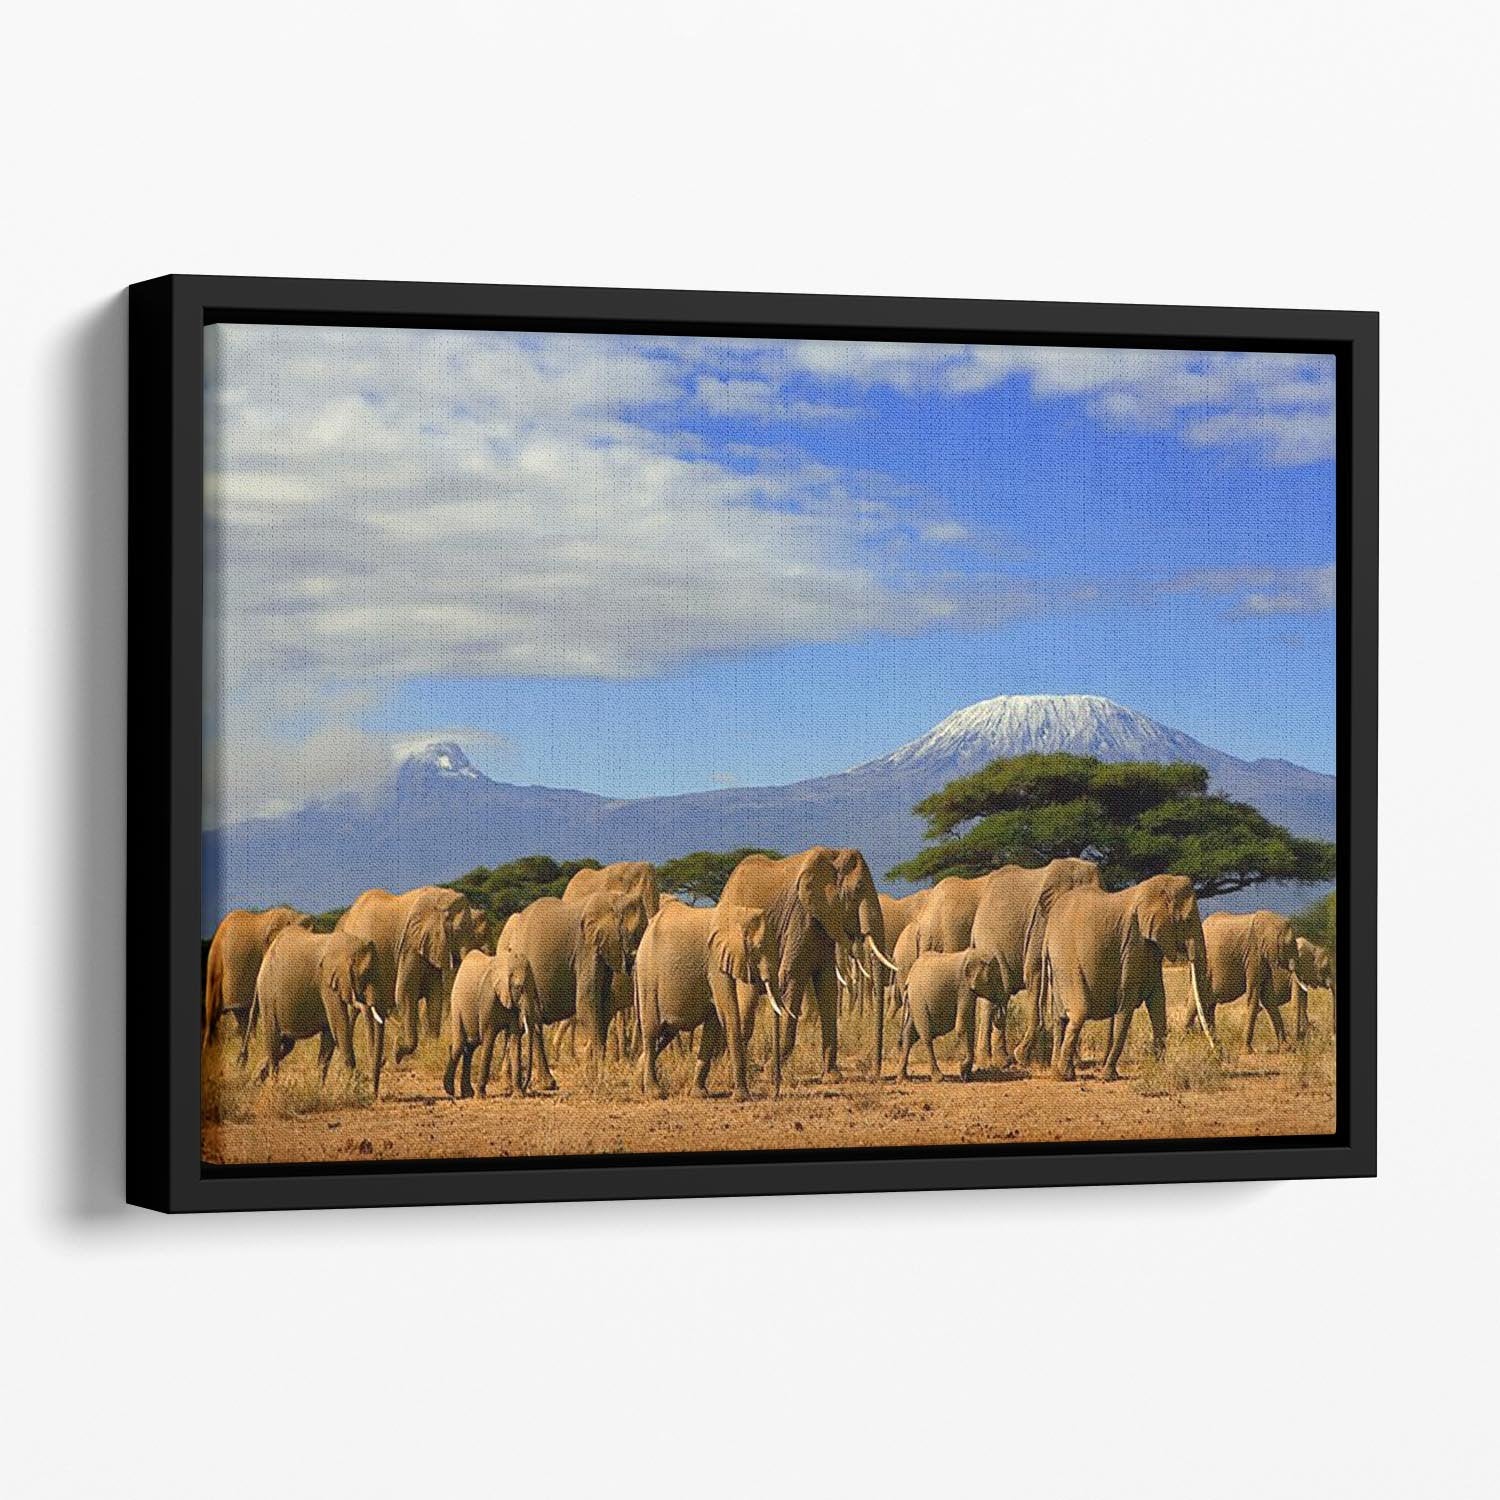 Kilimanjaro And Elephants Floating Framed Canvas - Canvas Art Rocks - 1